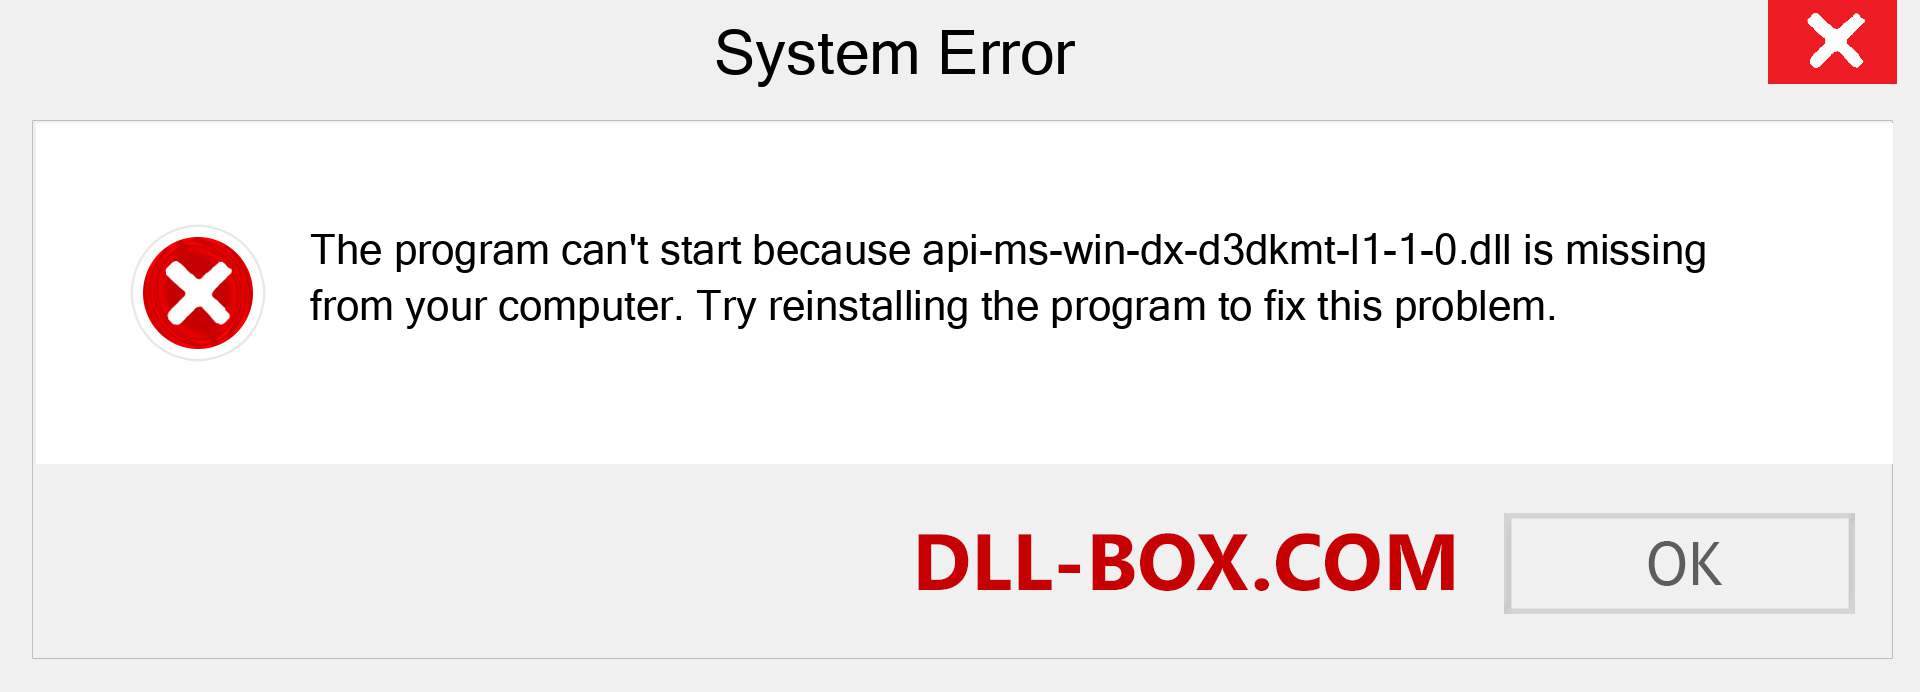  api-ms-win-dx-d3dkmt-l1-1-0.dll file is missing?. Download for Windows 7, 8, 10 - Fix  api-ms-win-dx-d3dkmt-l1-1-0 dll Missing Error on Windows, photos, images